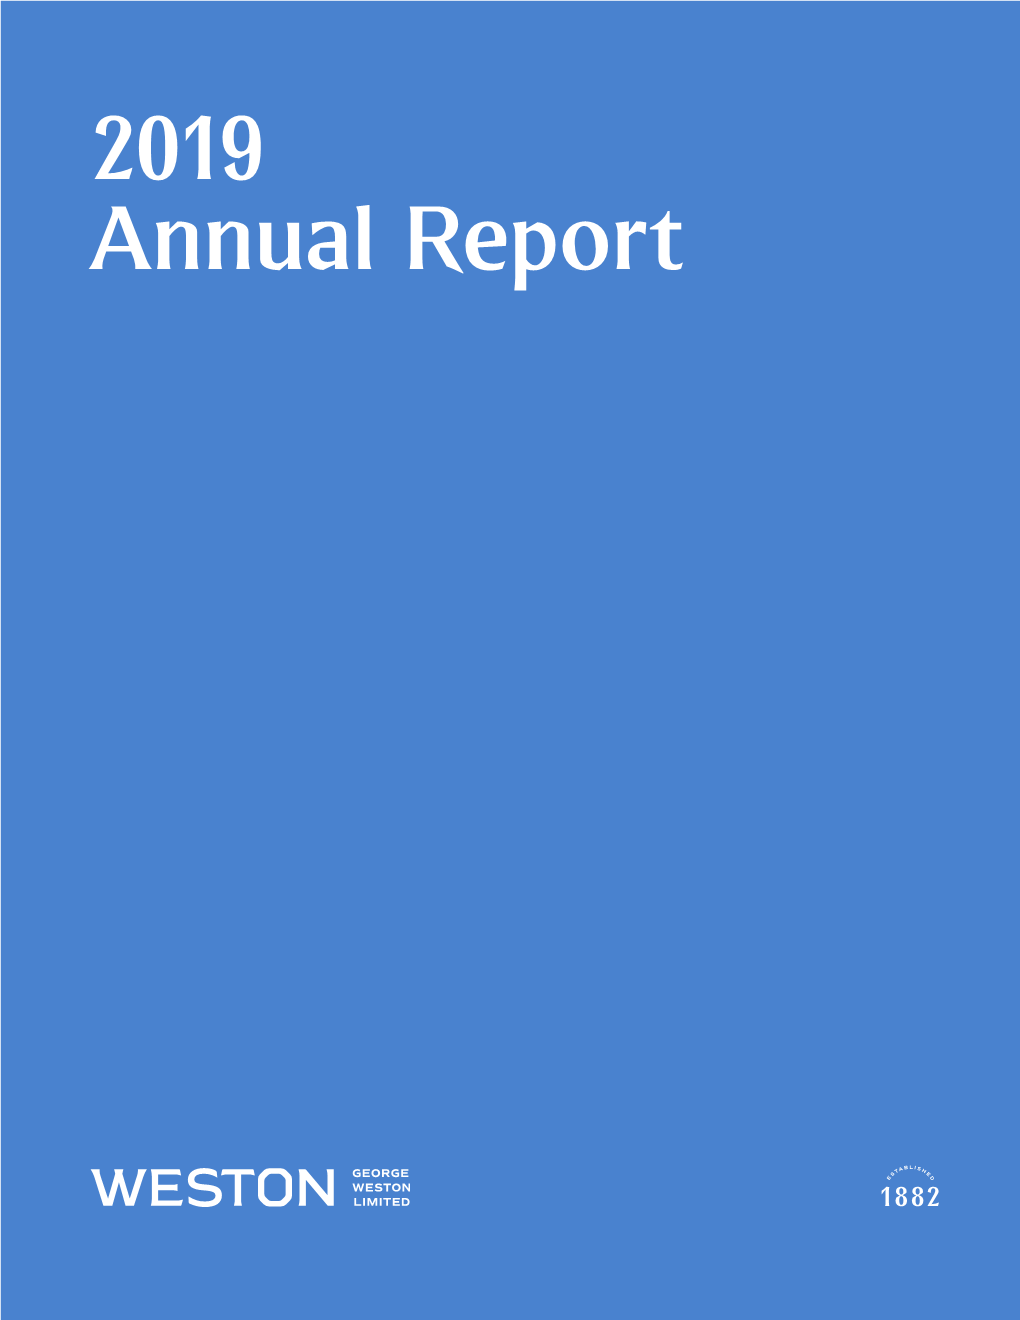 George Weston Annual Report 2019